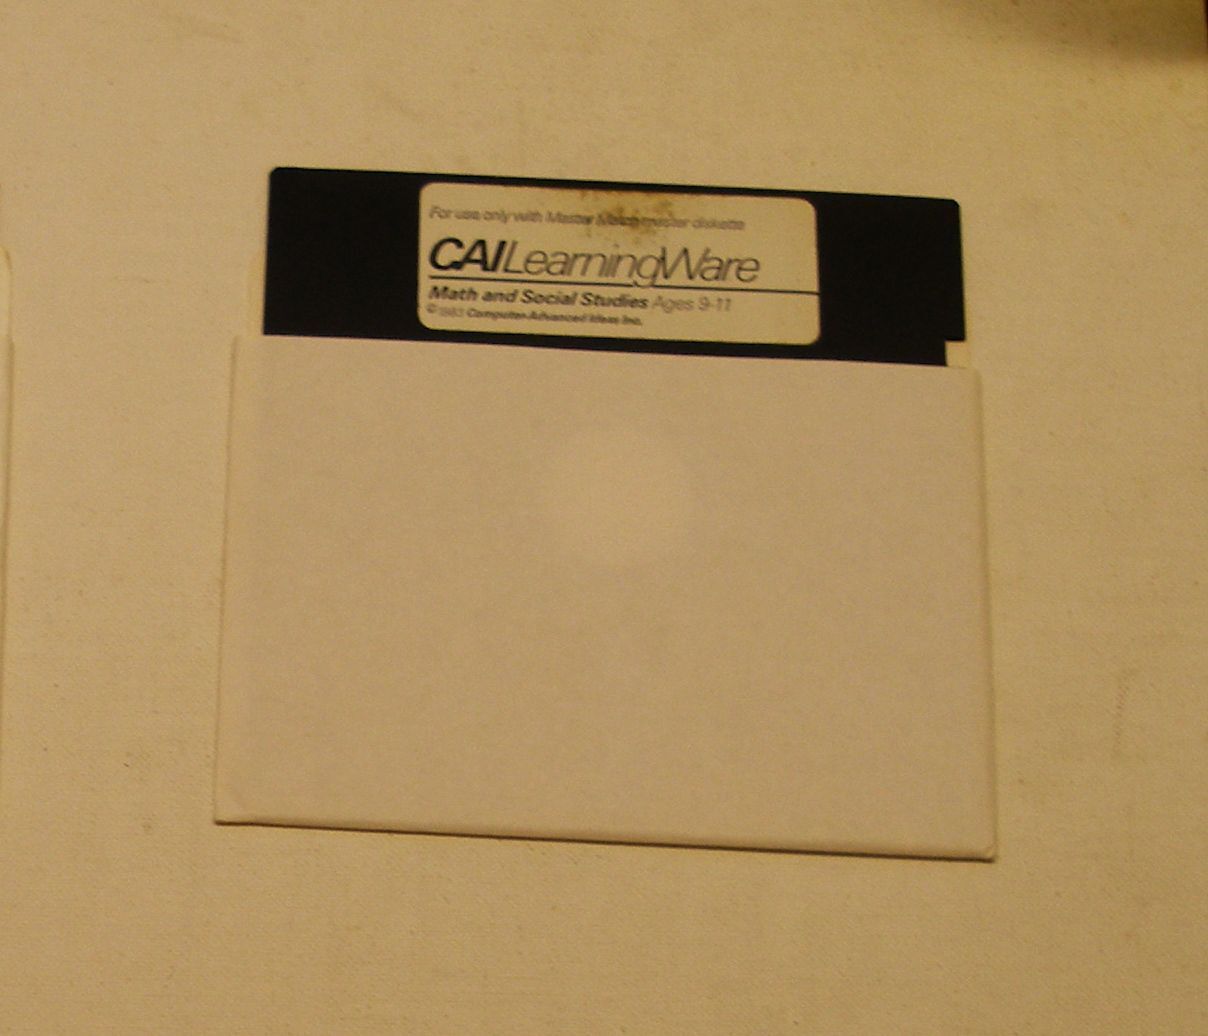 Math and Social Studies Disk for Master Match for Apple II Plus, IIe, IIc, IIGS